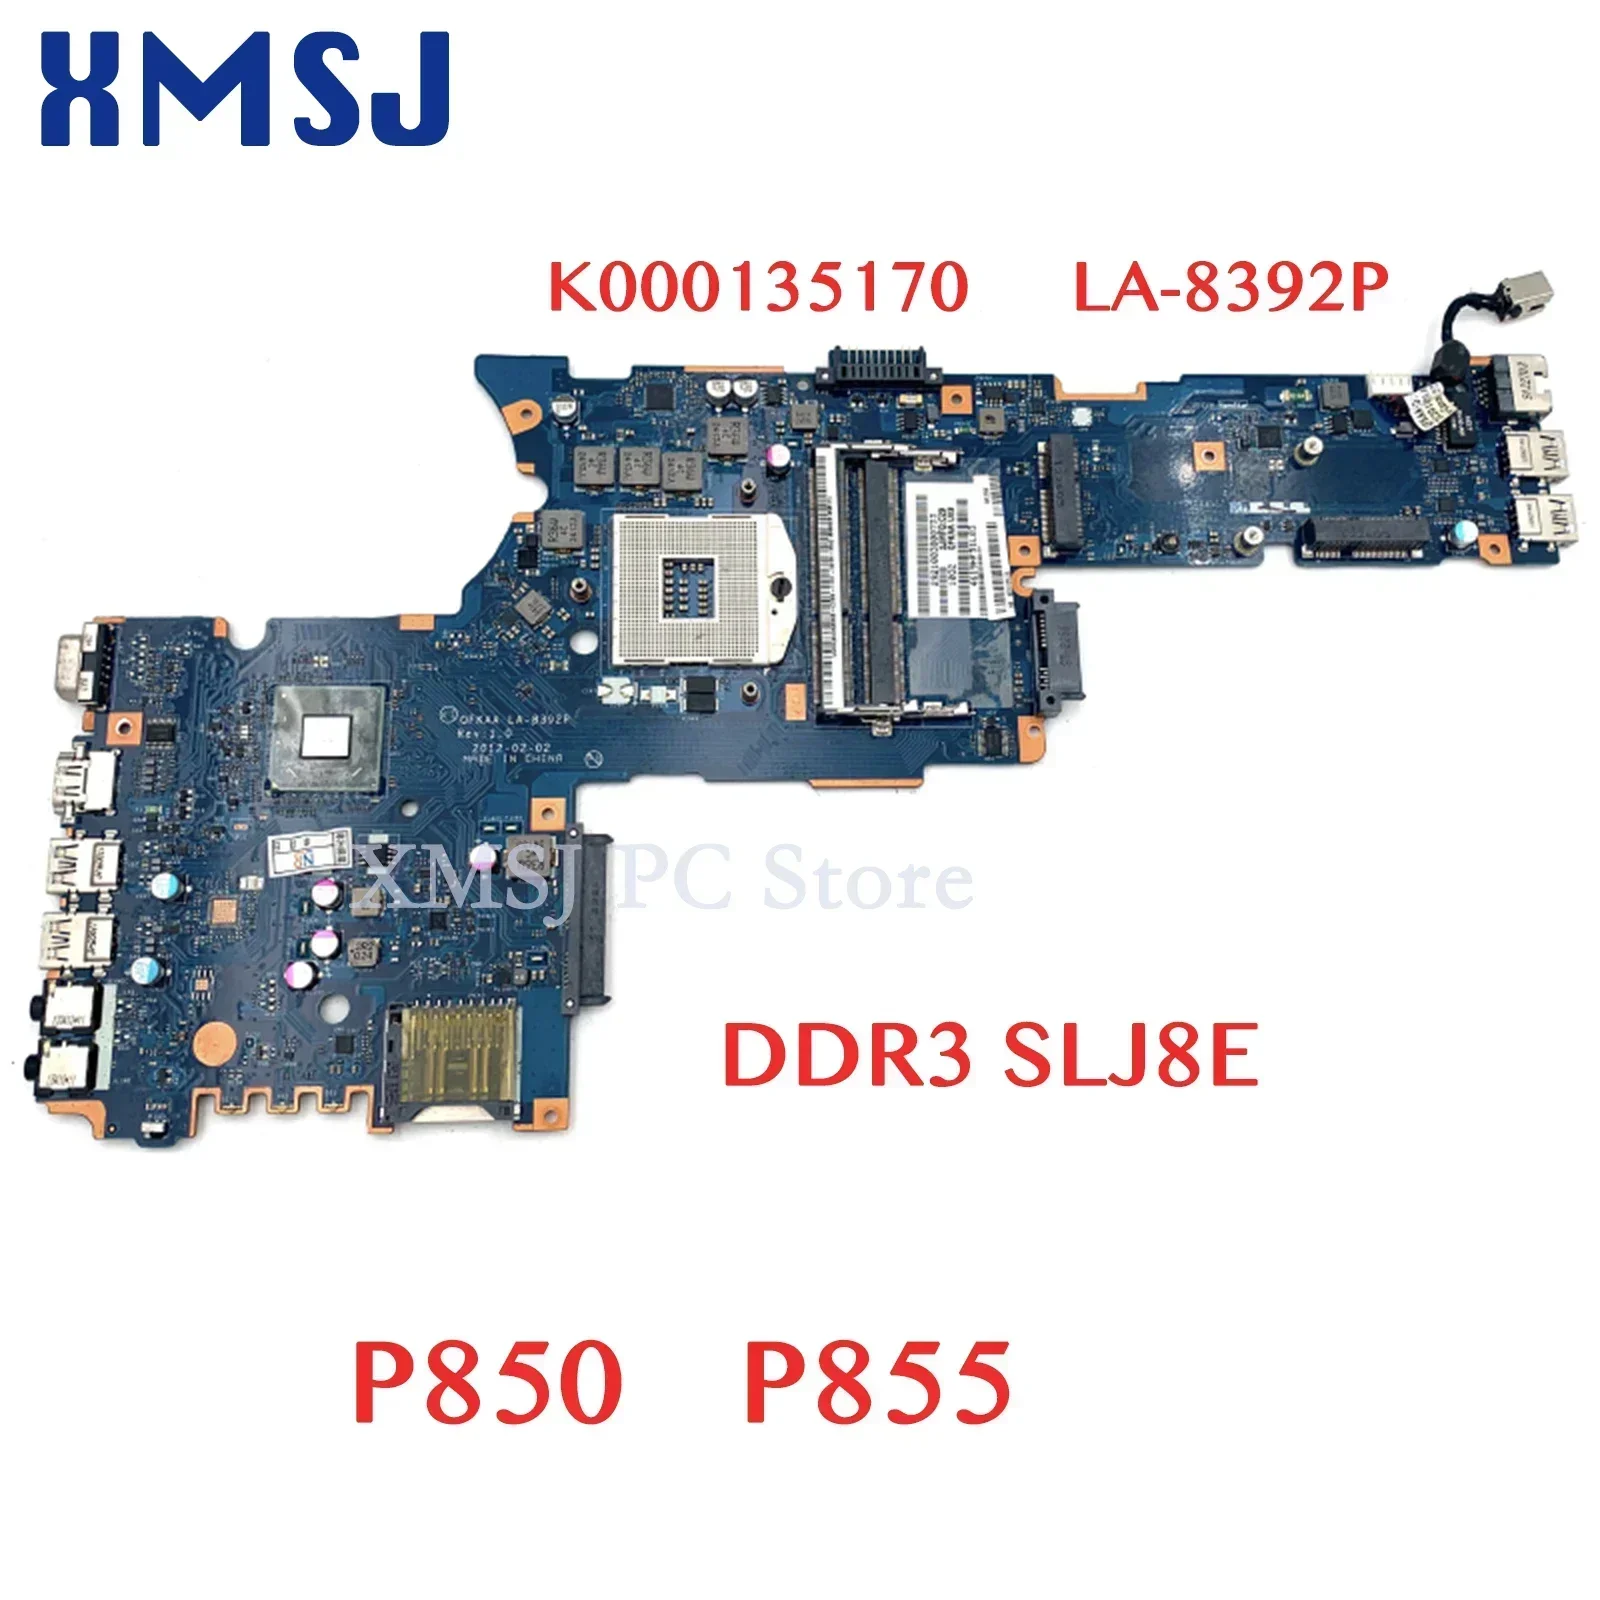 

XMSJ For Toshiba Satellite P850 P855 Laptop Motherboard K000135170 QFKAA LA-8392P DDR3 SLJ8E Main Board Full Test